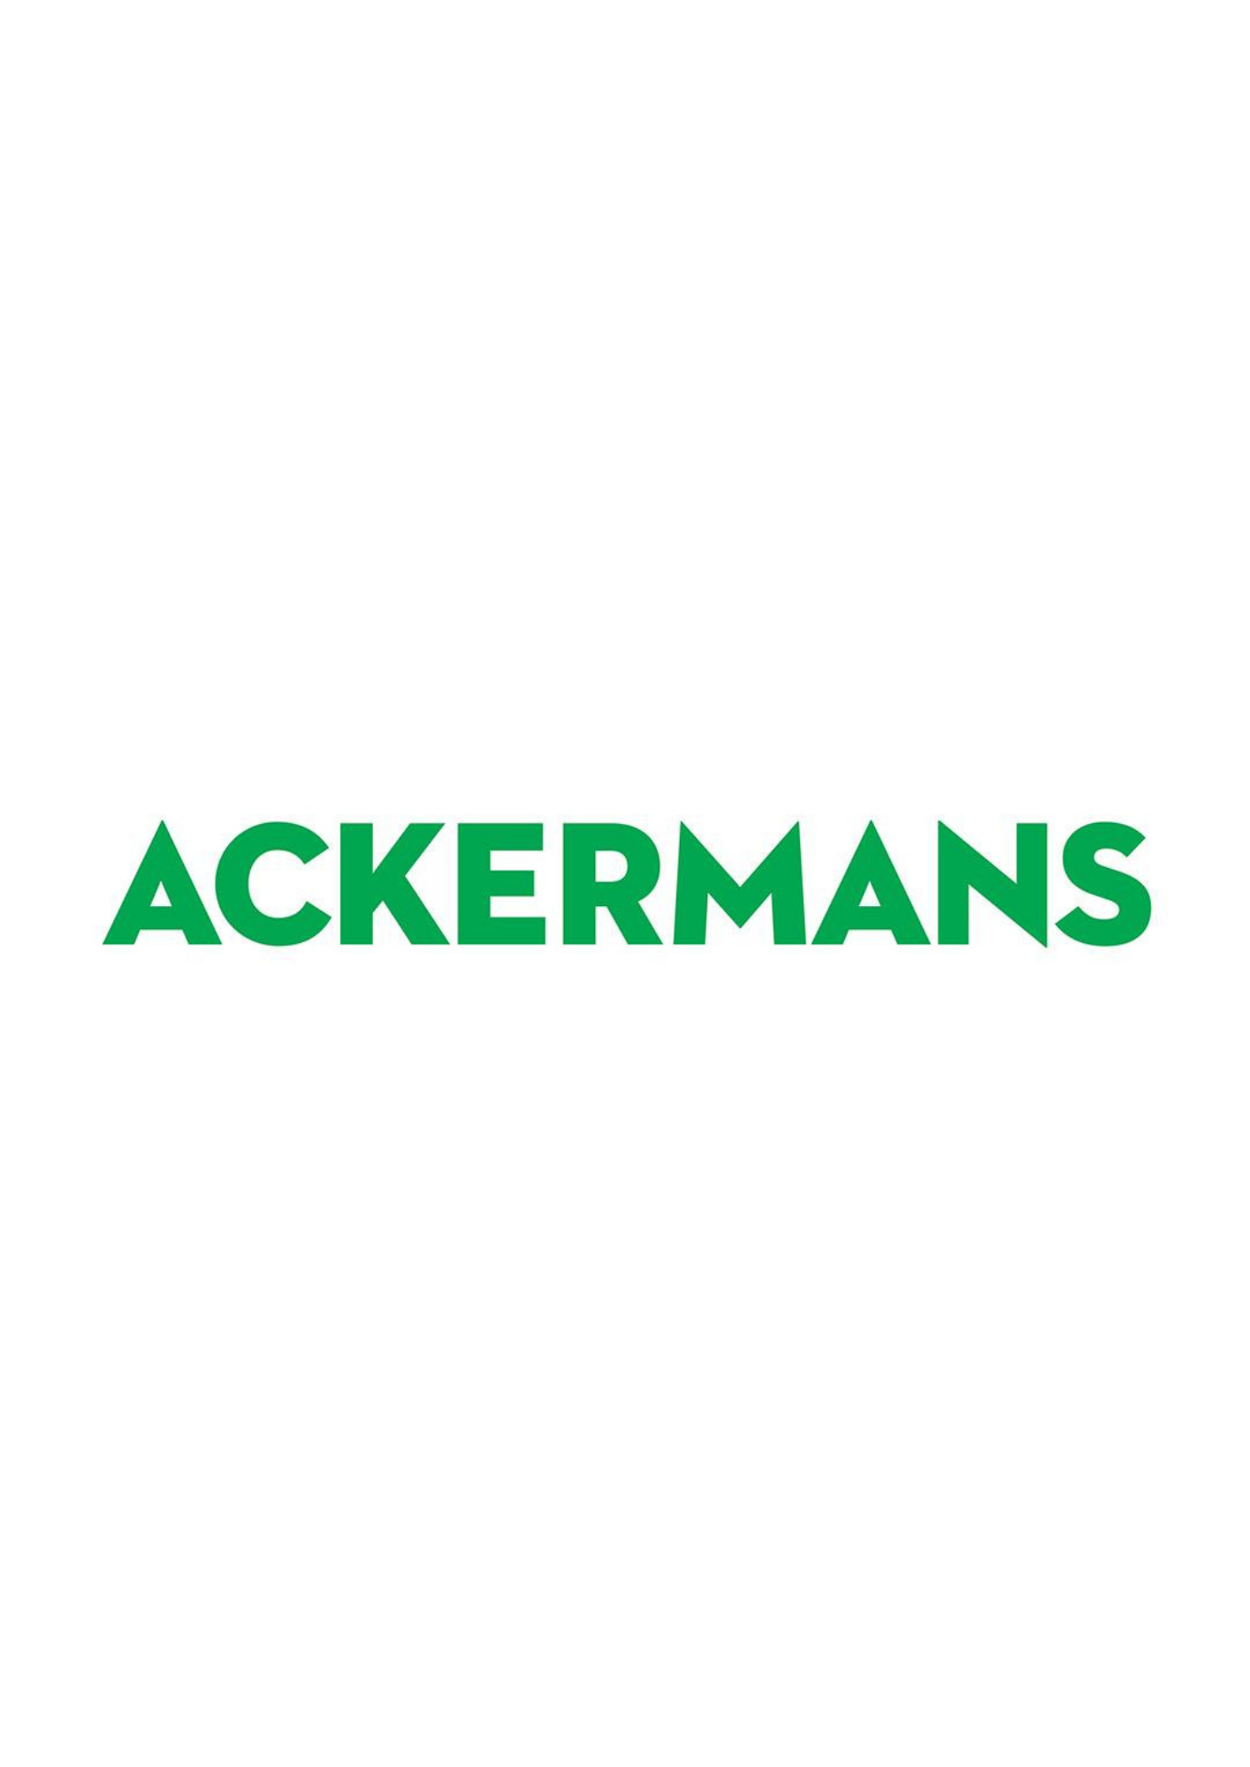 Ackermans Promotional specials